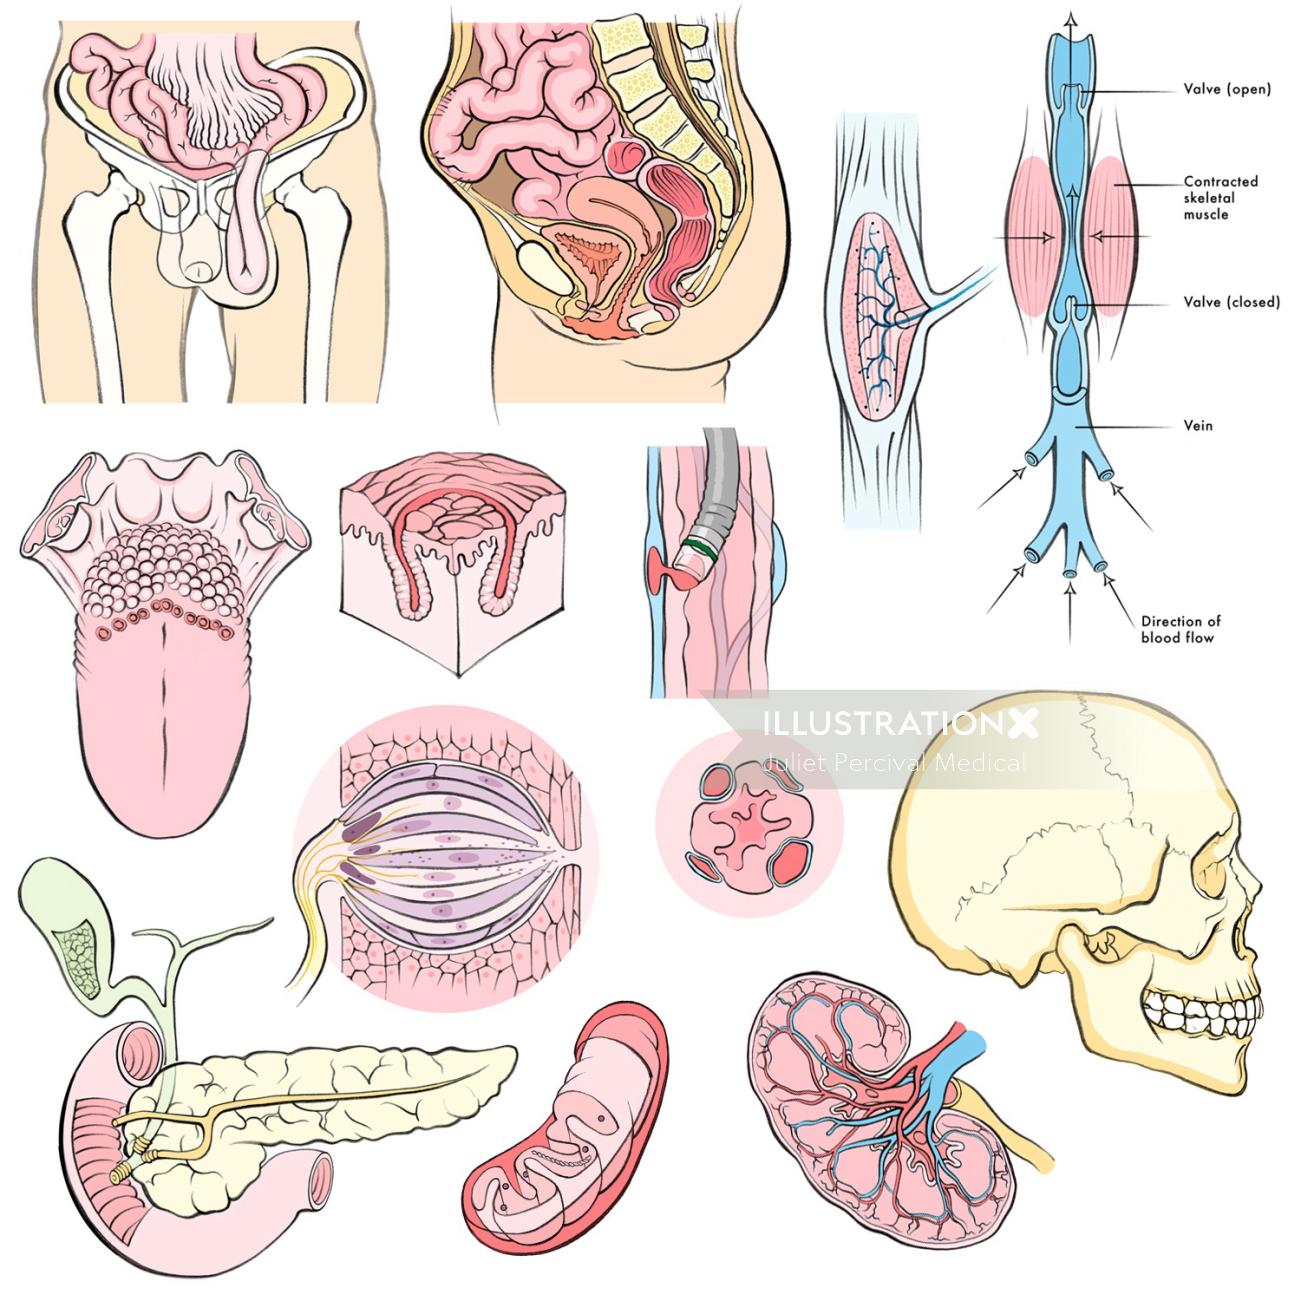 anatomie humaine, crâne, rein, langue, pancréas, intestin, mitochondries